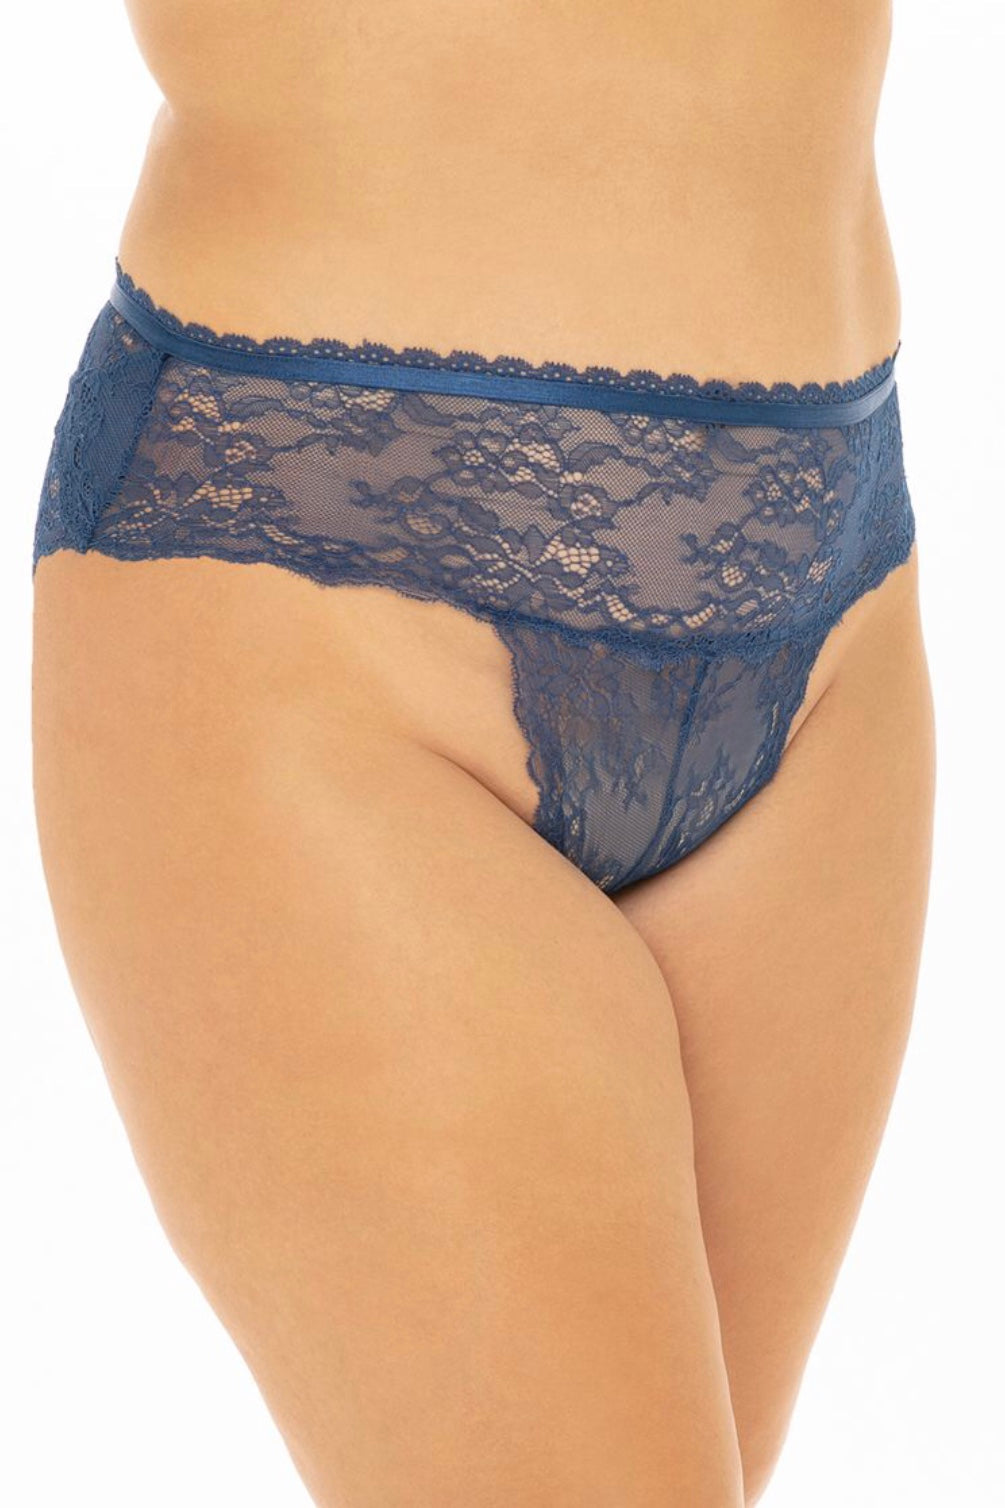 Stretch lace panty estate blue - CurvynBeautiful 